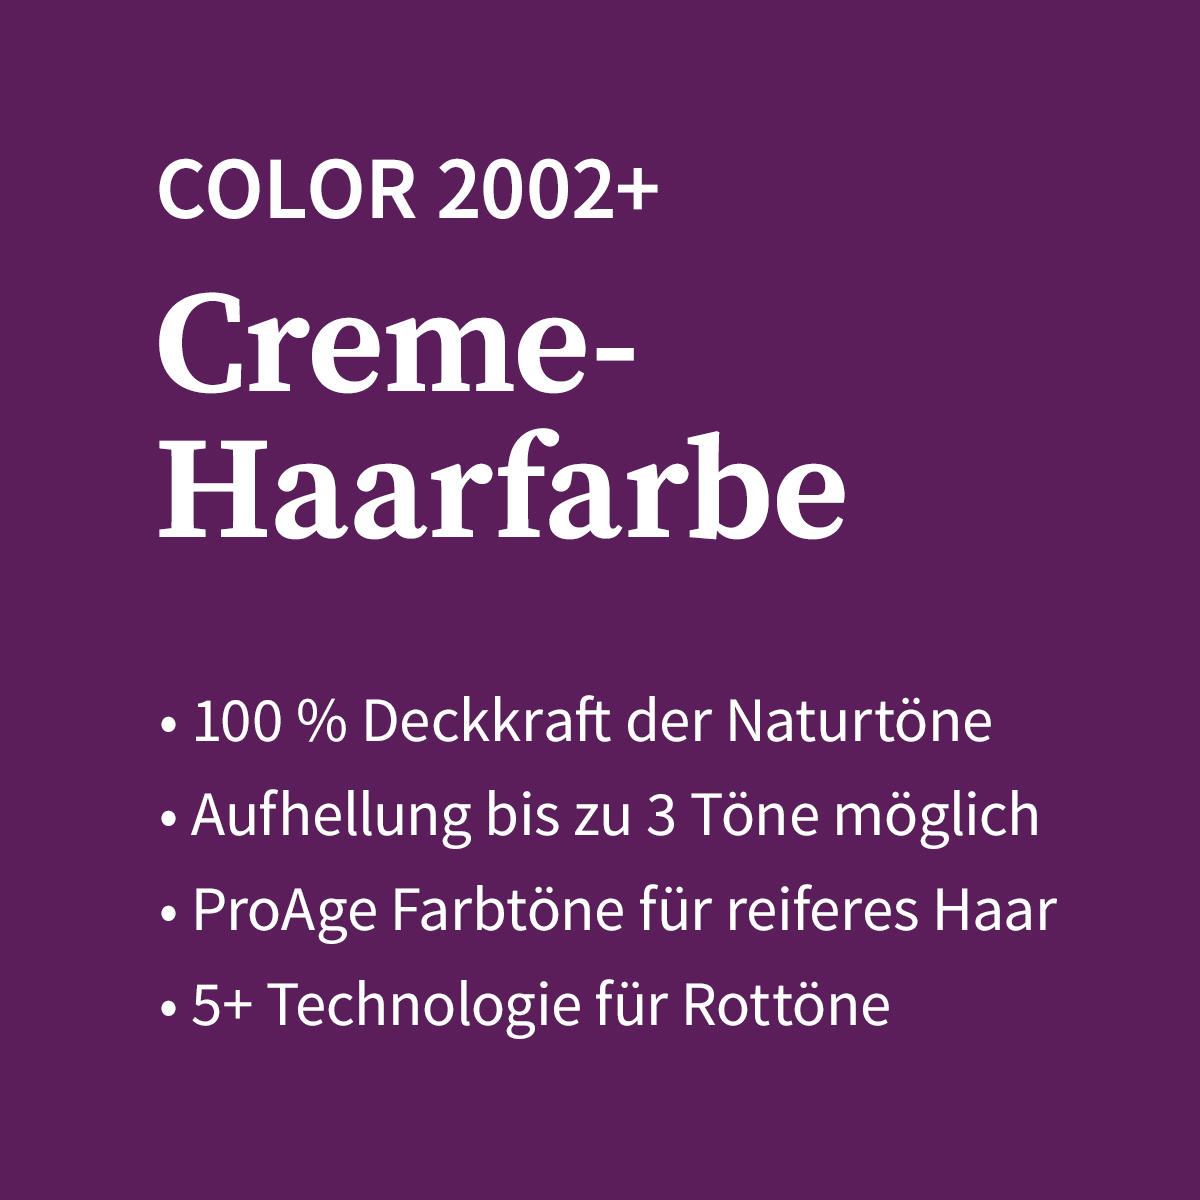 Basler Color 2002+ Cremehaarfarbe 7/3 mittelblond gold, Tube 60 ml - 4